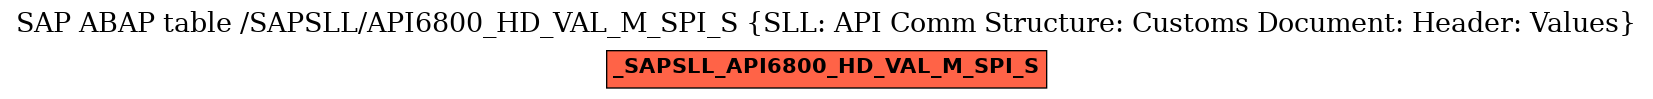 E-R Diagram for table /SAPSLL/API6800_HD_VAL_M_SPI_S (SLL: API Comm Structure: Customs Document: Header: Values)